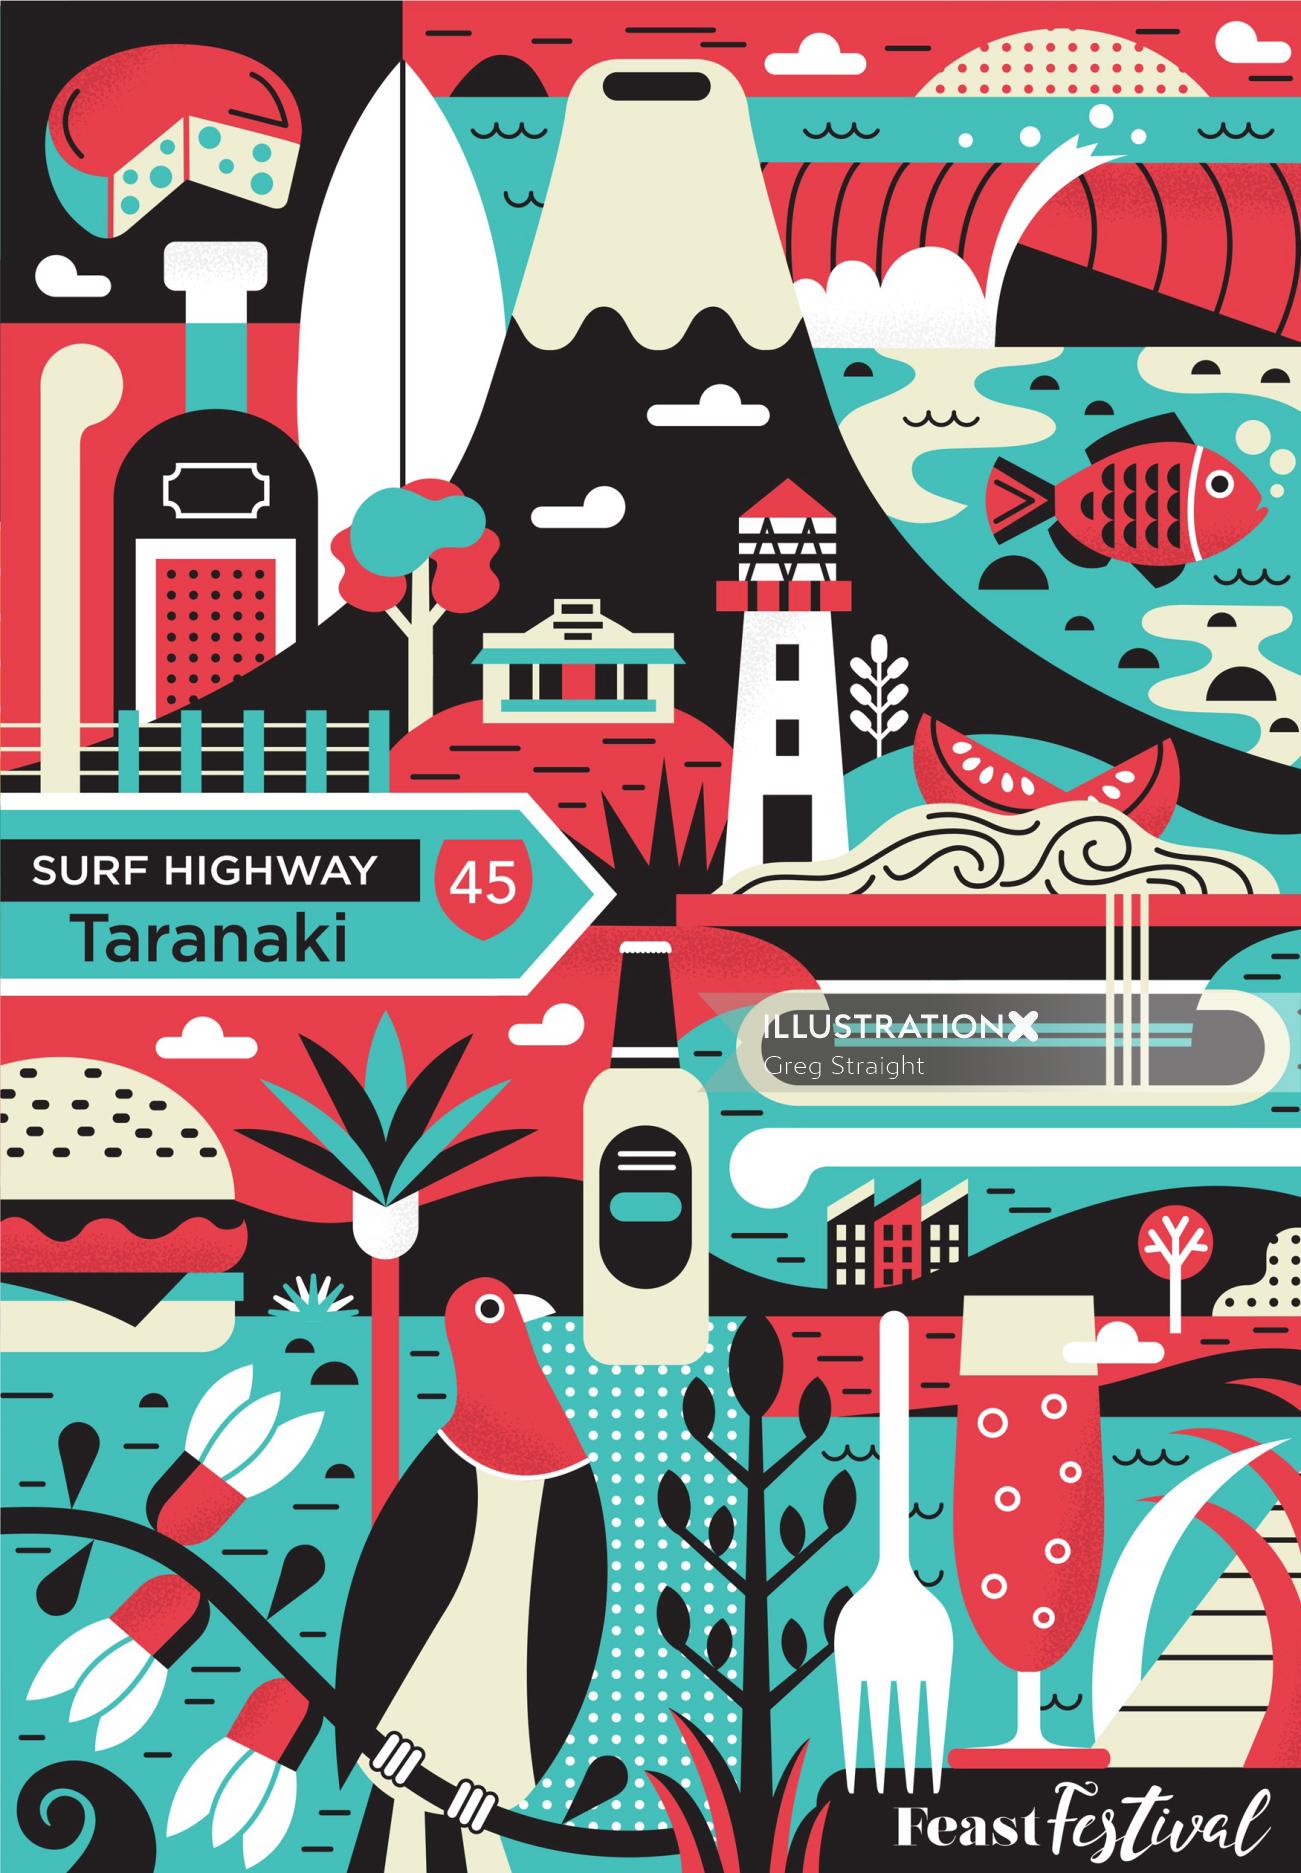 Taranaki feast festival poster illustration 